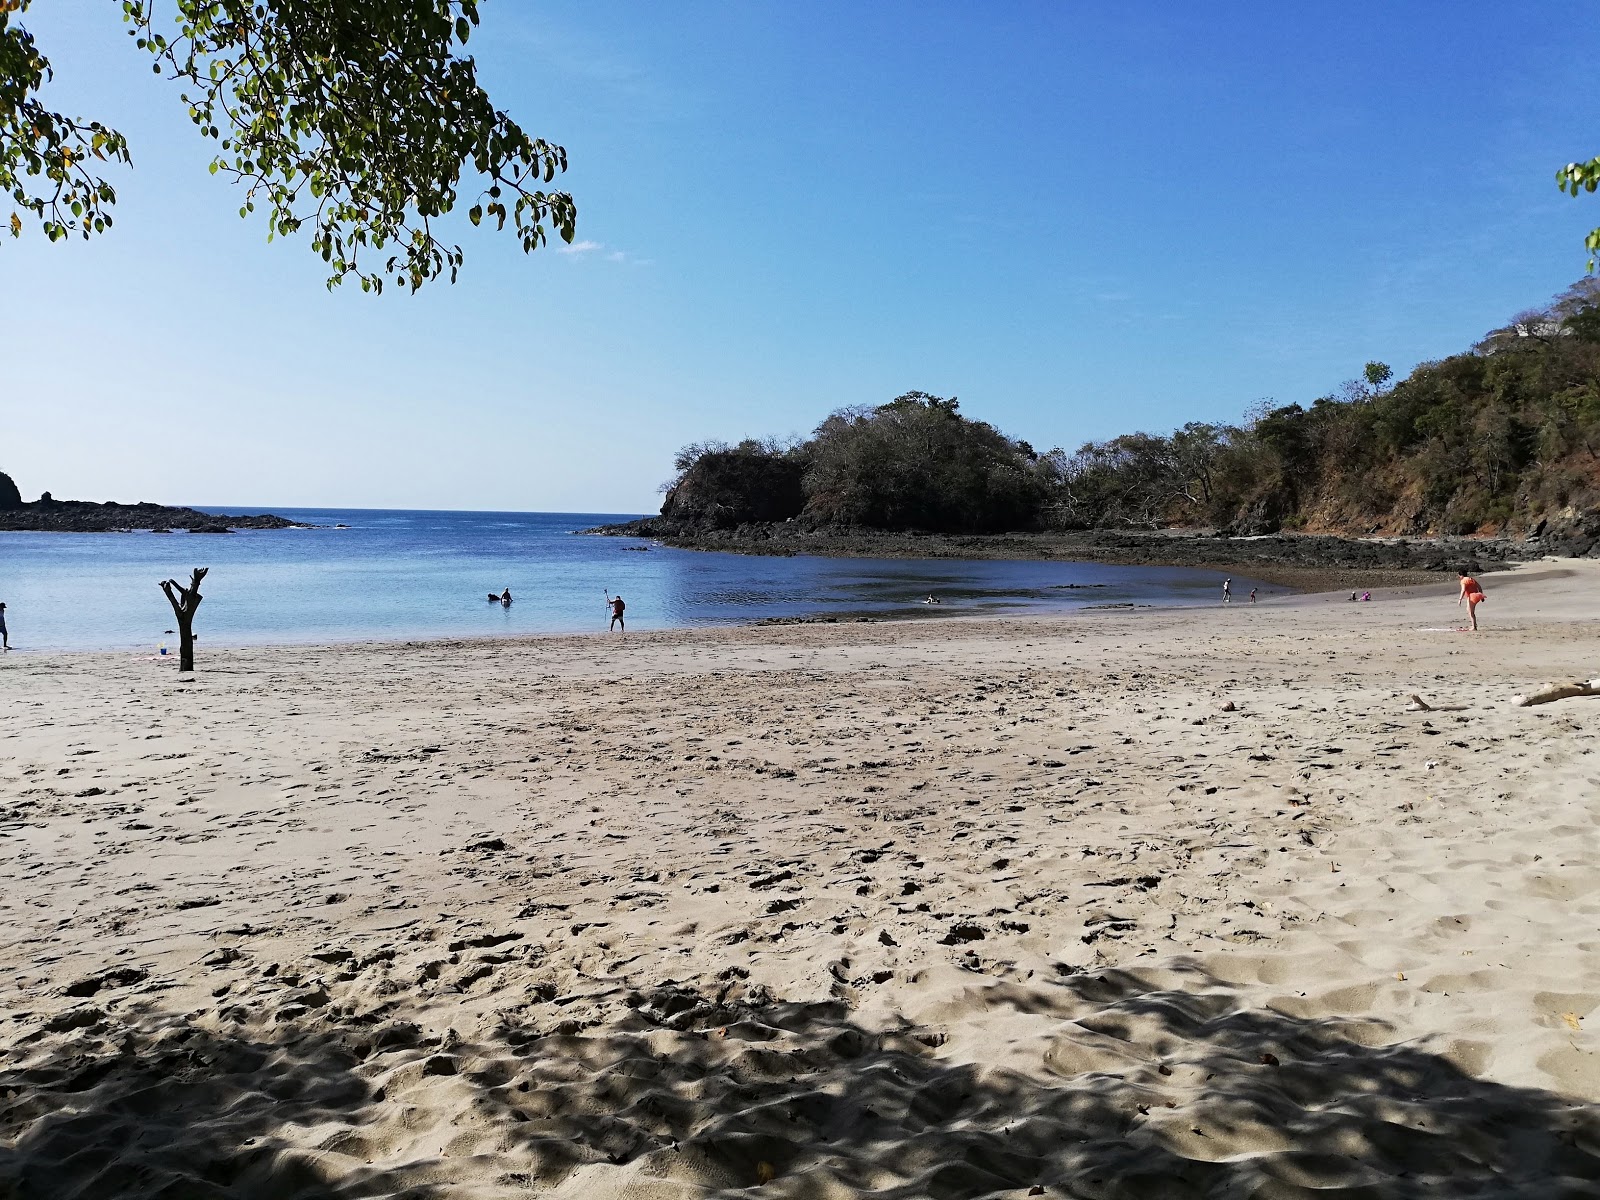 Fotografija Achotines Beach nahaja se v naravnem okolju